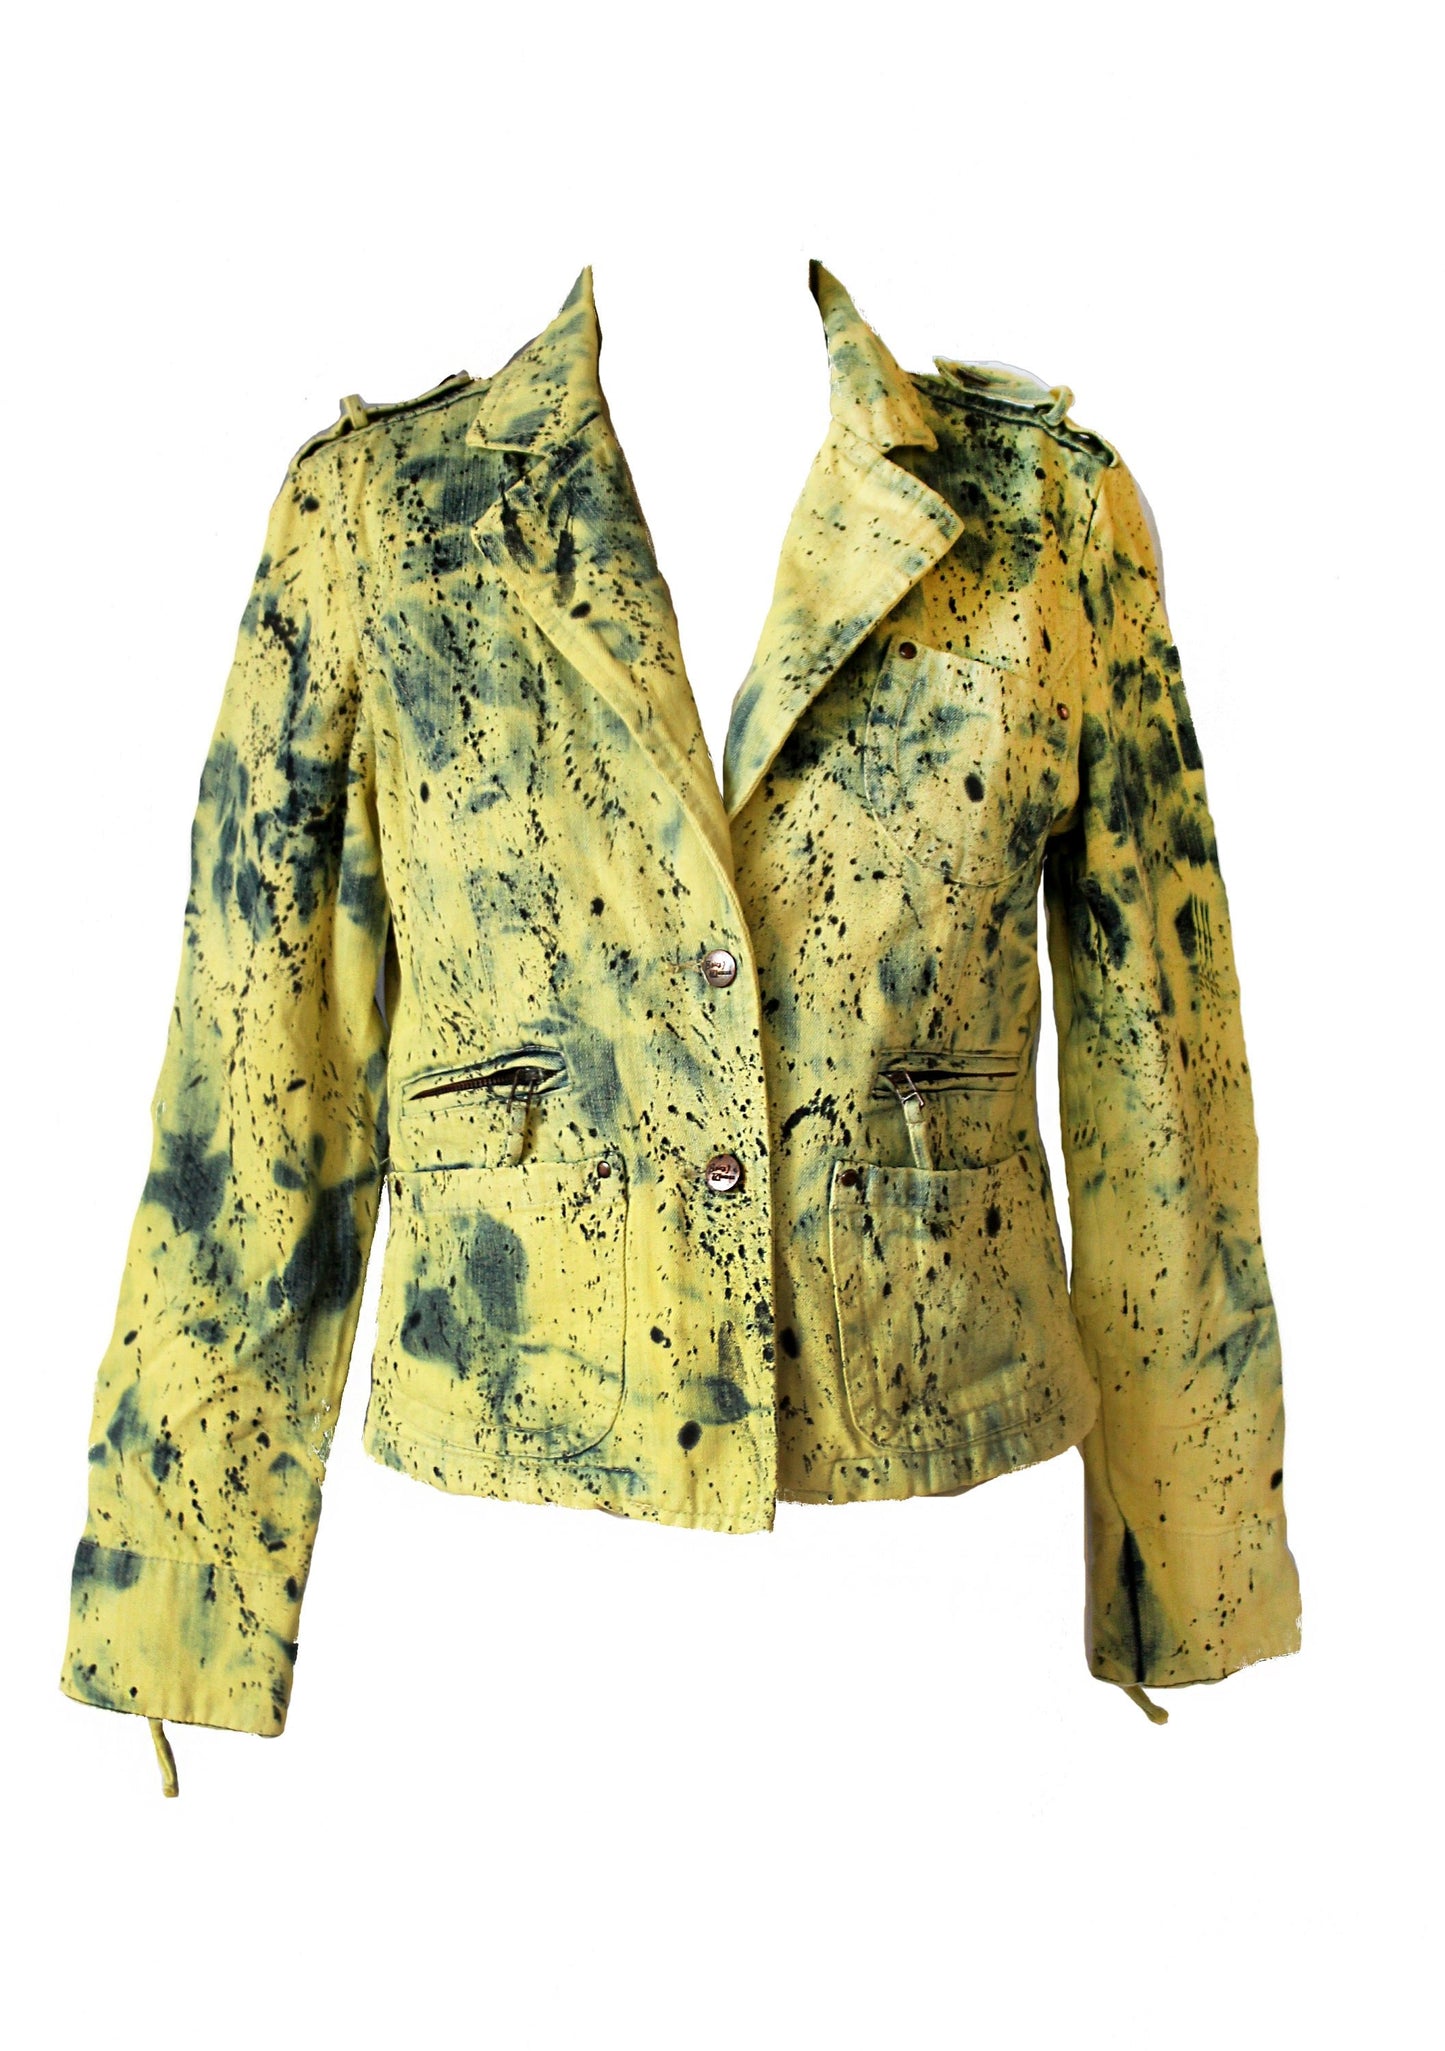 Acid wash yellow & black splatter blazer denim jacket | size L